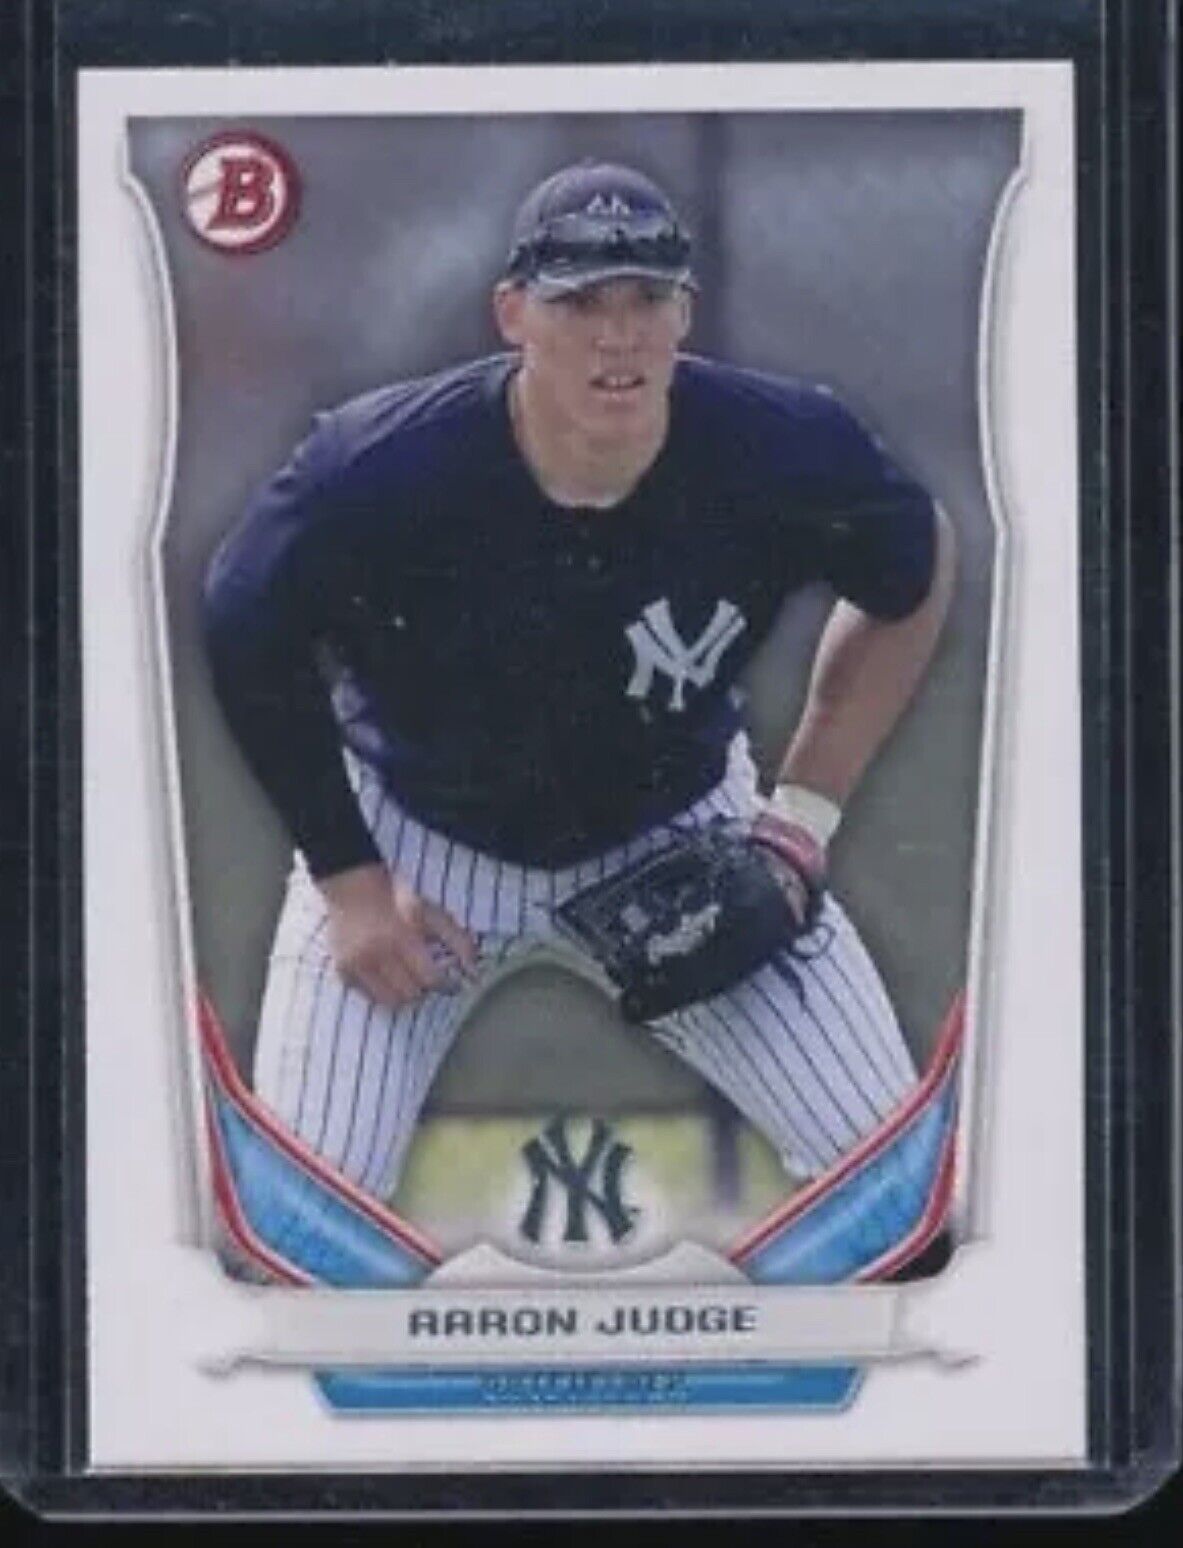 2014 Aaron Judge Bowman Rookie Card #TP-39  RC New York Yankees